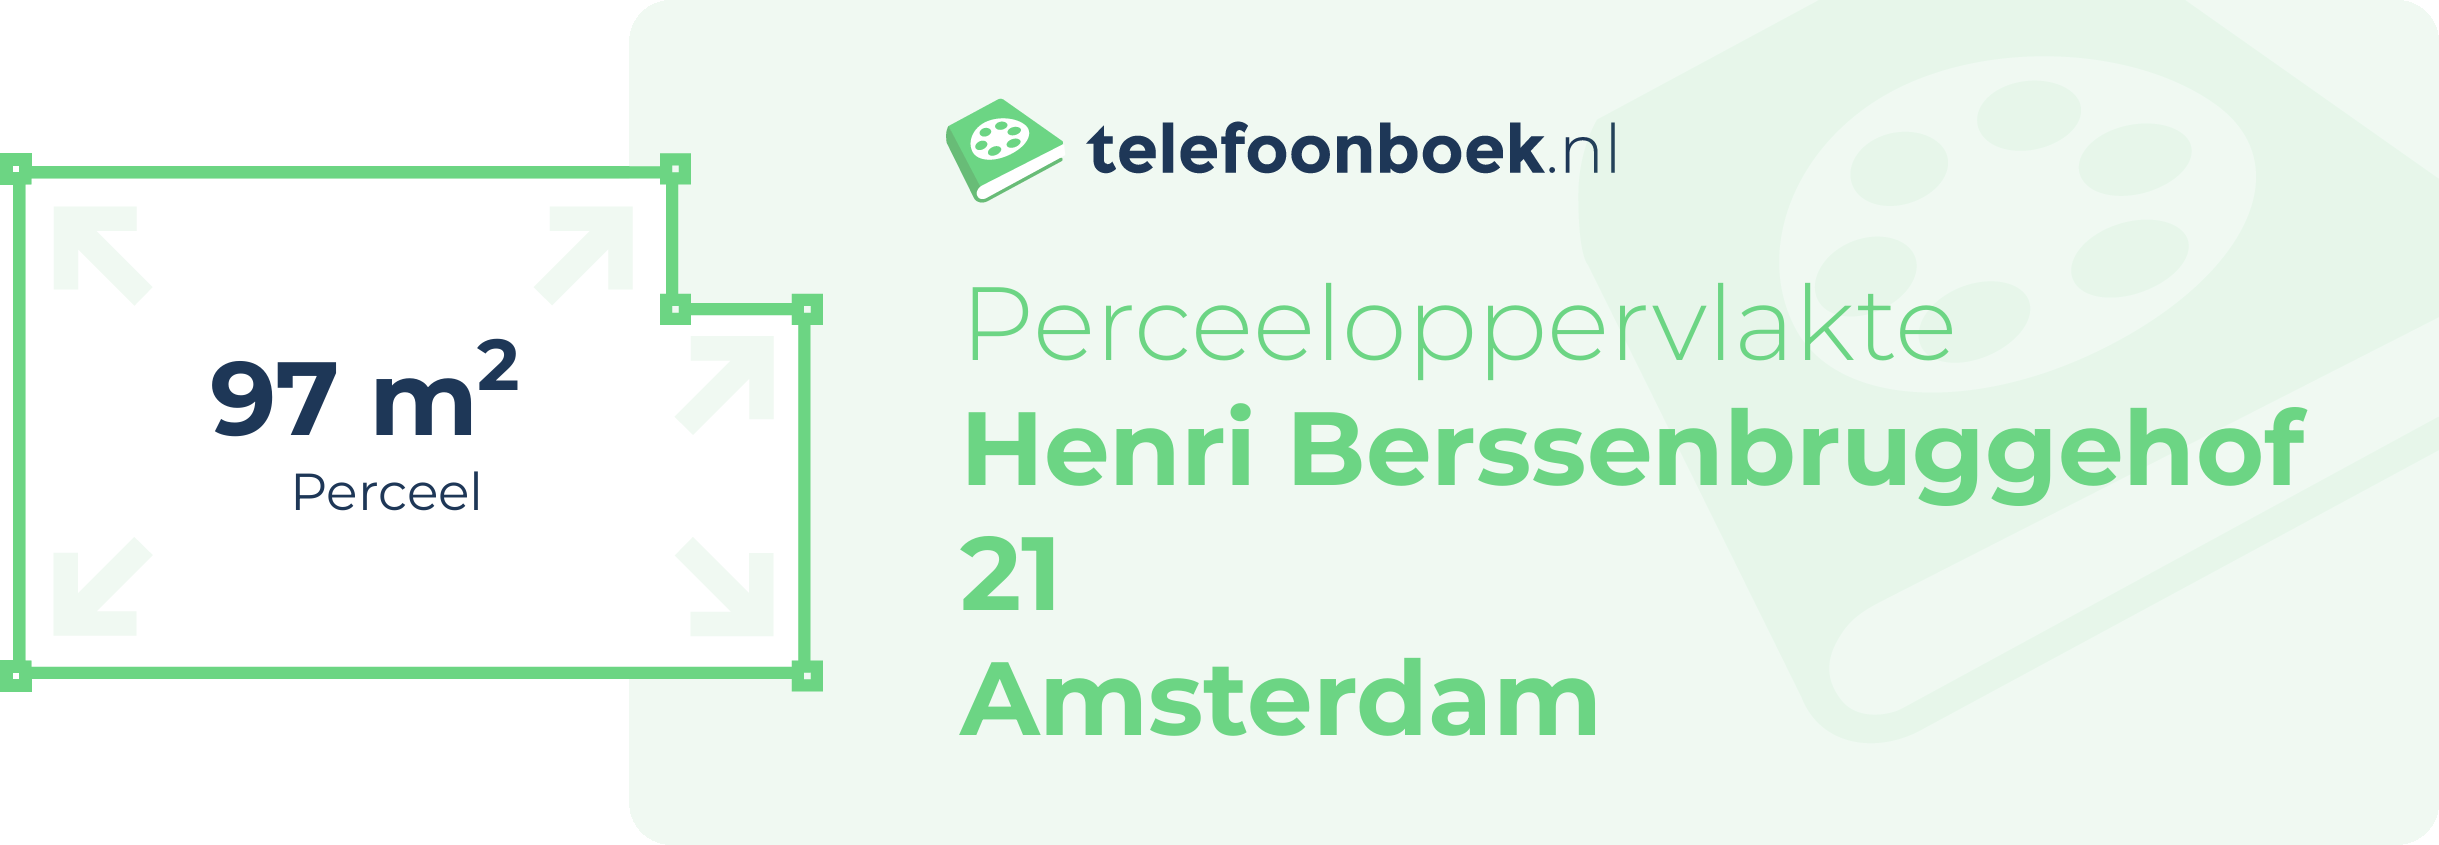 Perceeloppervlakte Henri Berssenbruggehof 21 Amsterdam